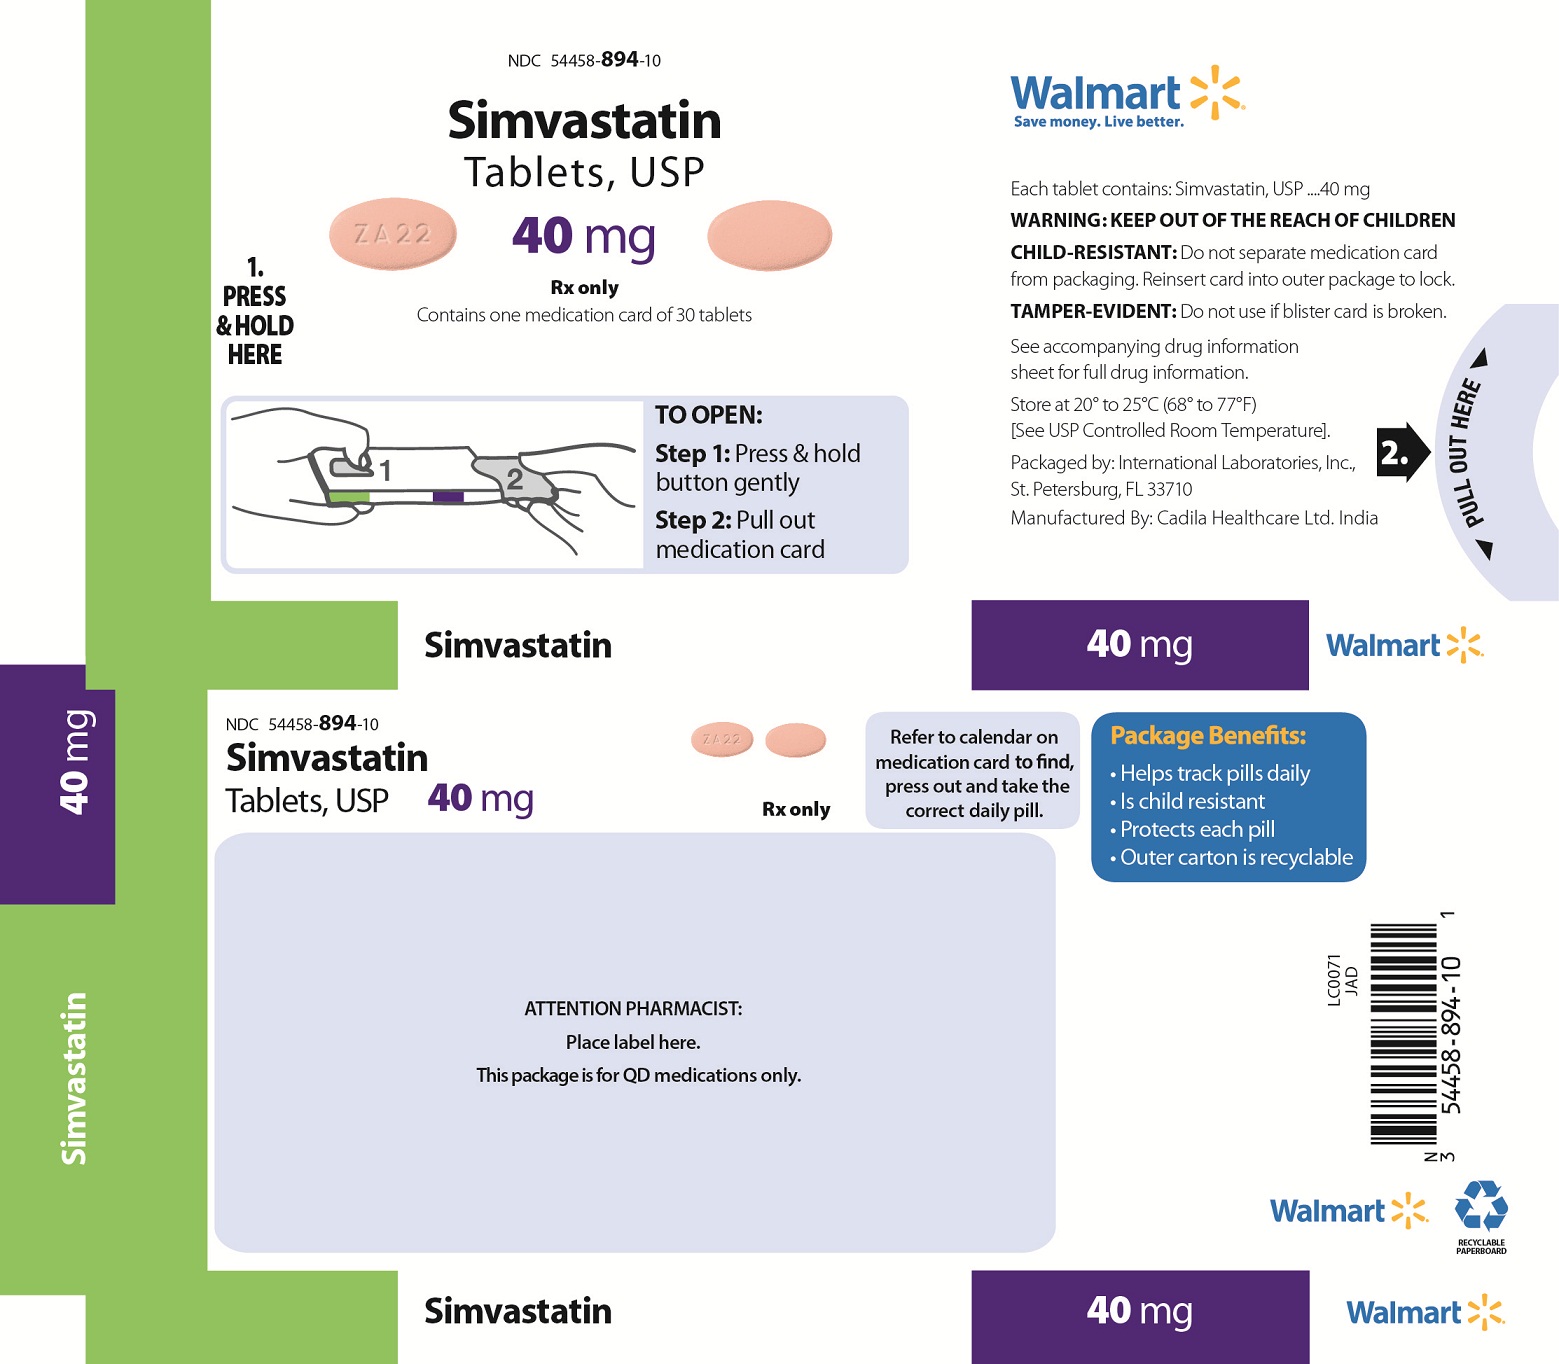 Simvastatin Tablets, USP 40 mg